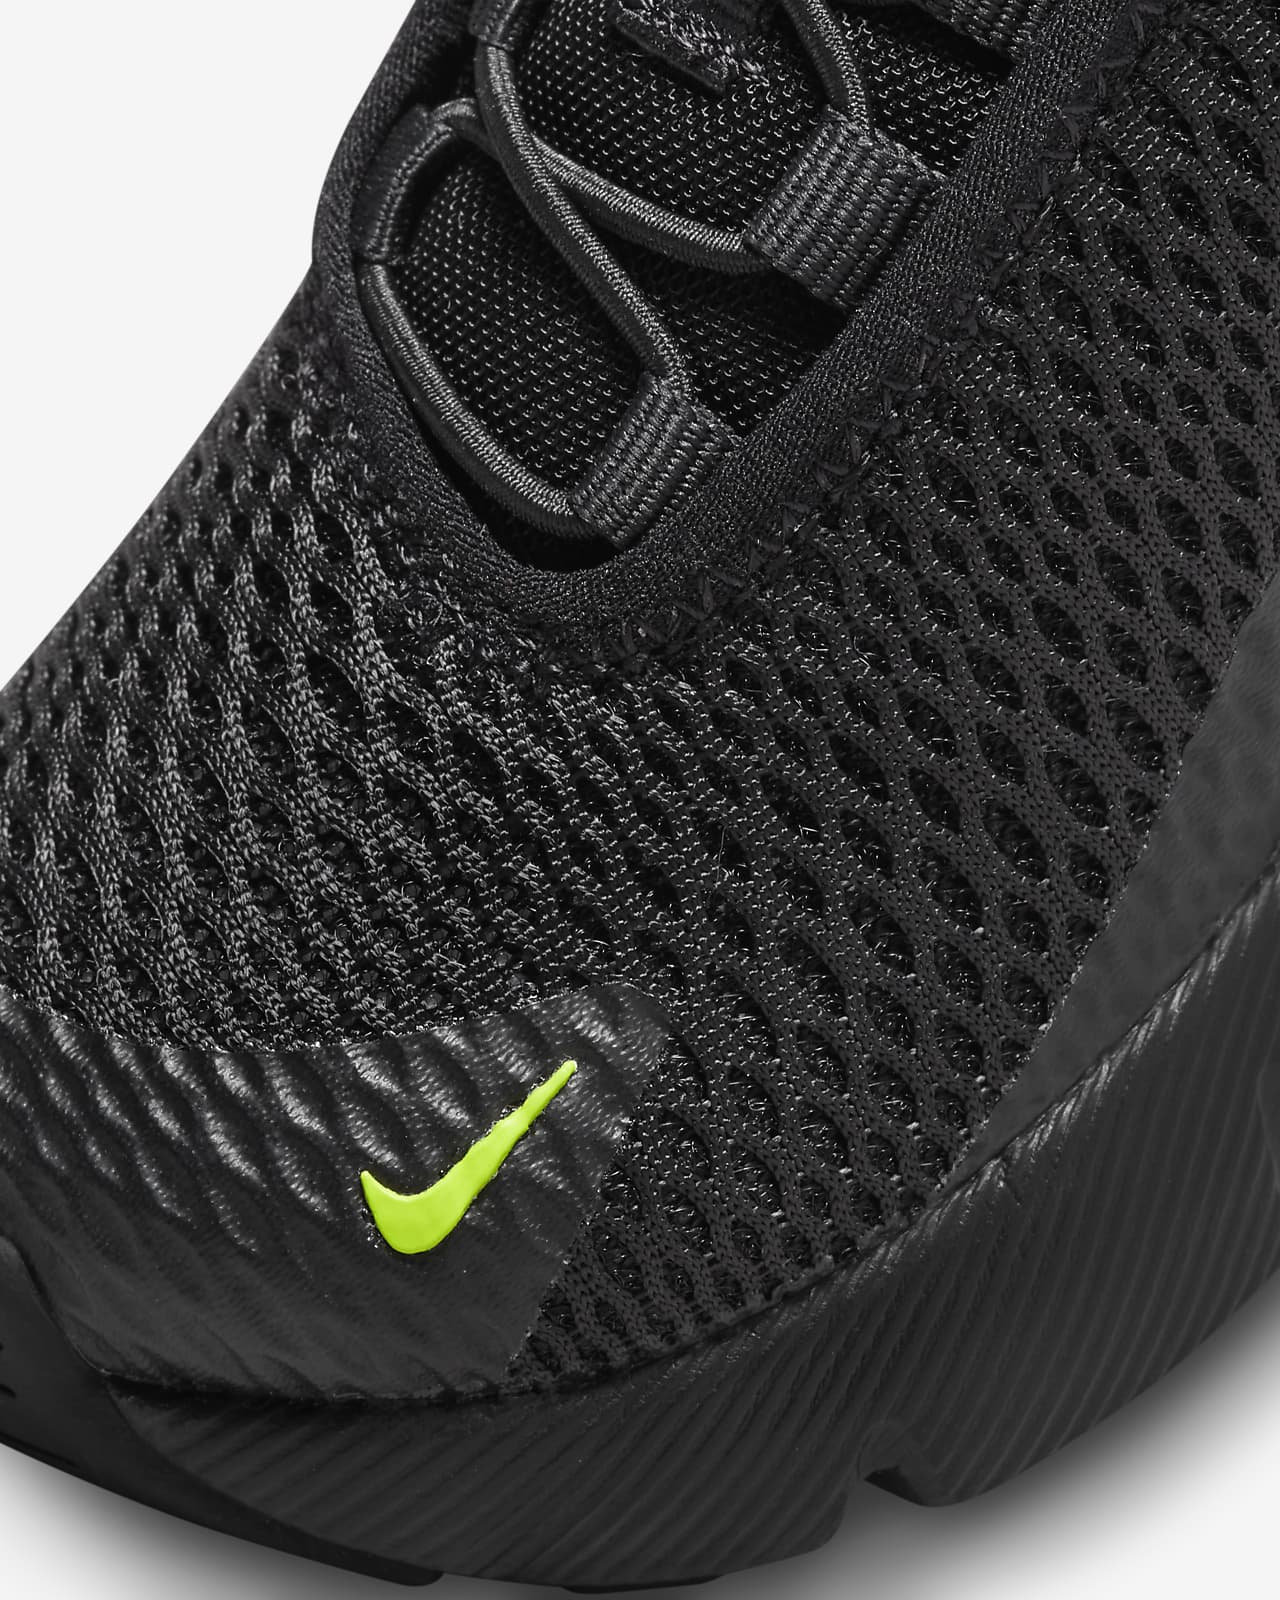 Charmant Comorama kleuring Nike Air Max 270 Schoenen voor baby's/peuters. Nike BE